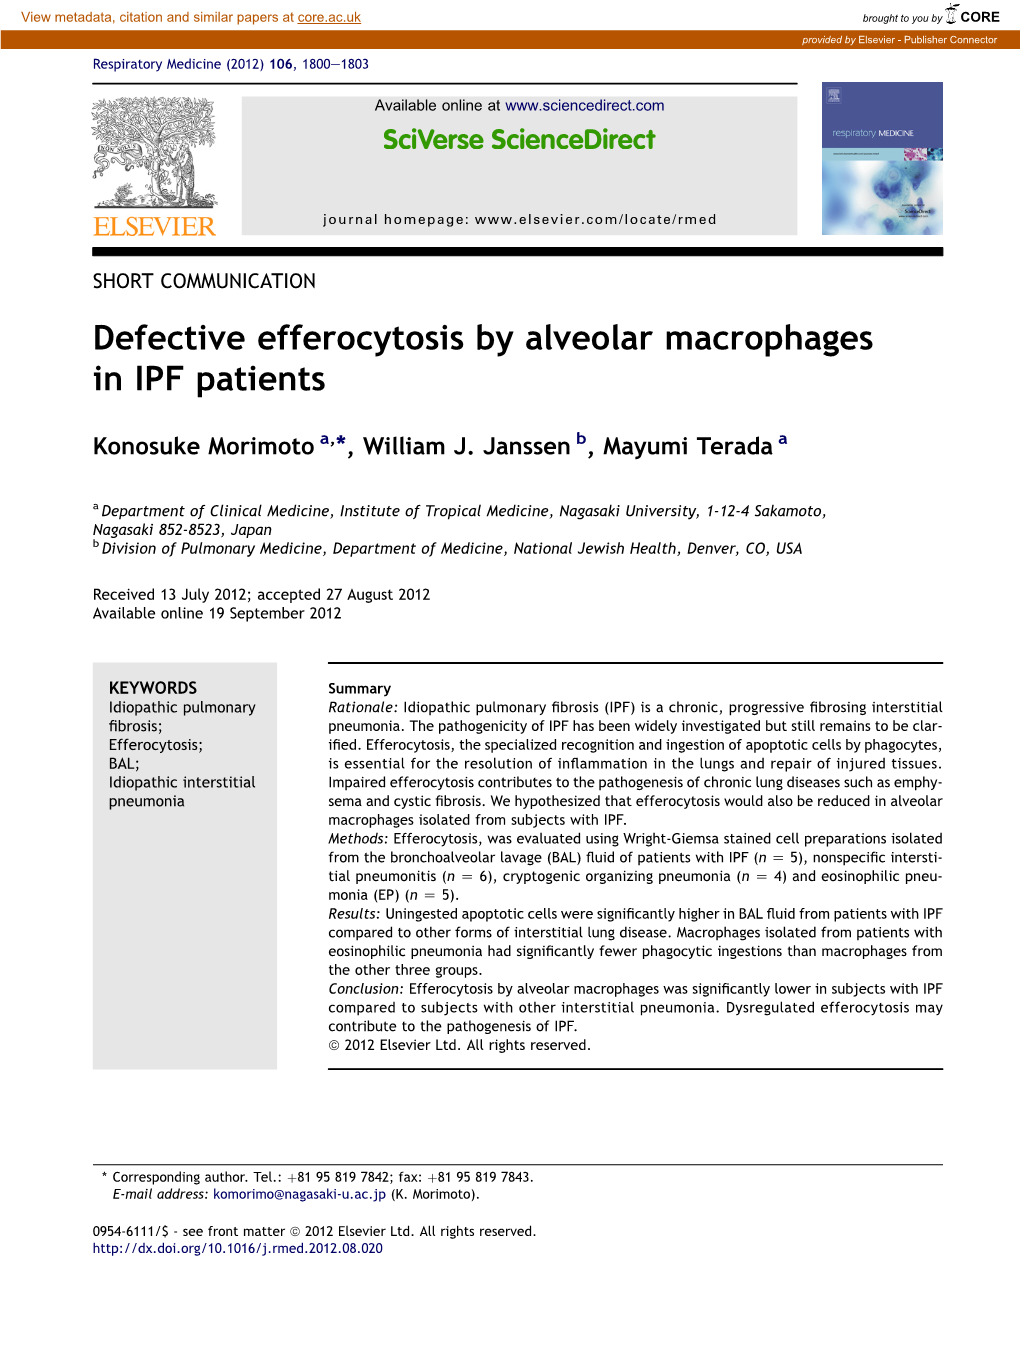 Defective Efferocytosis by Alveolar Macrophages in IPF Patients